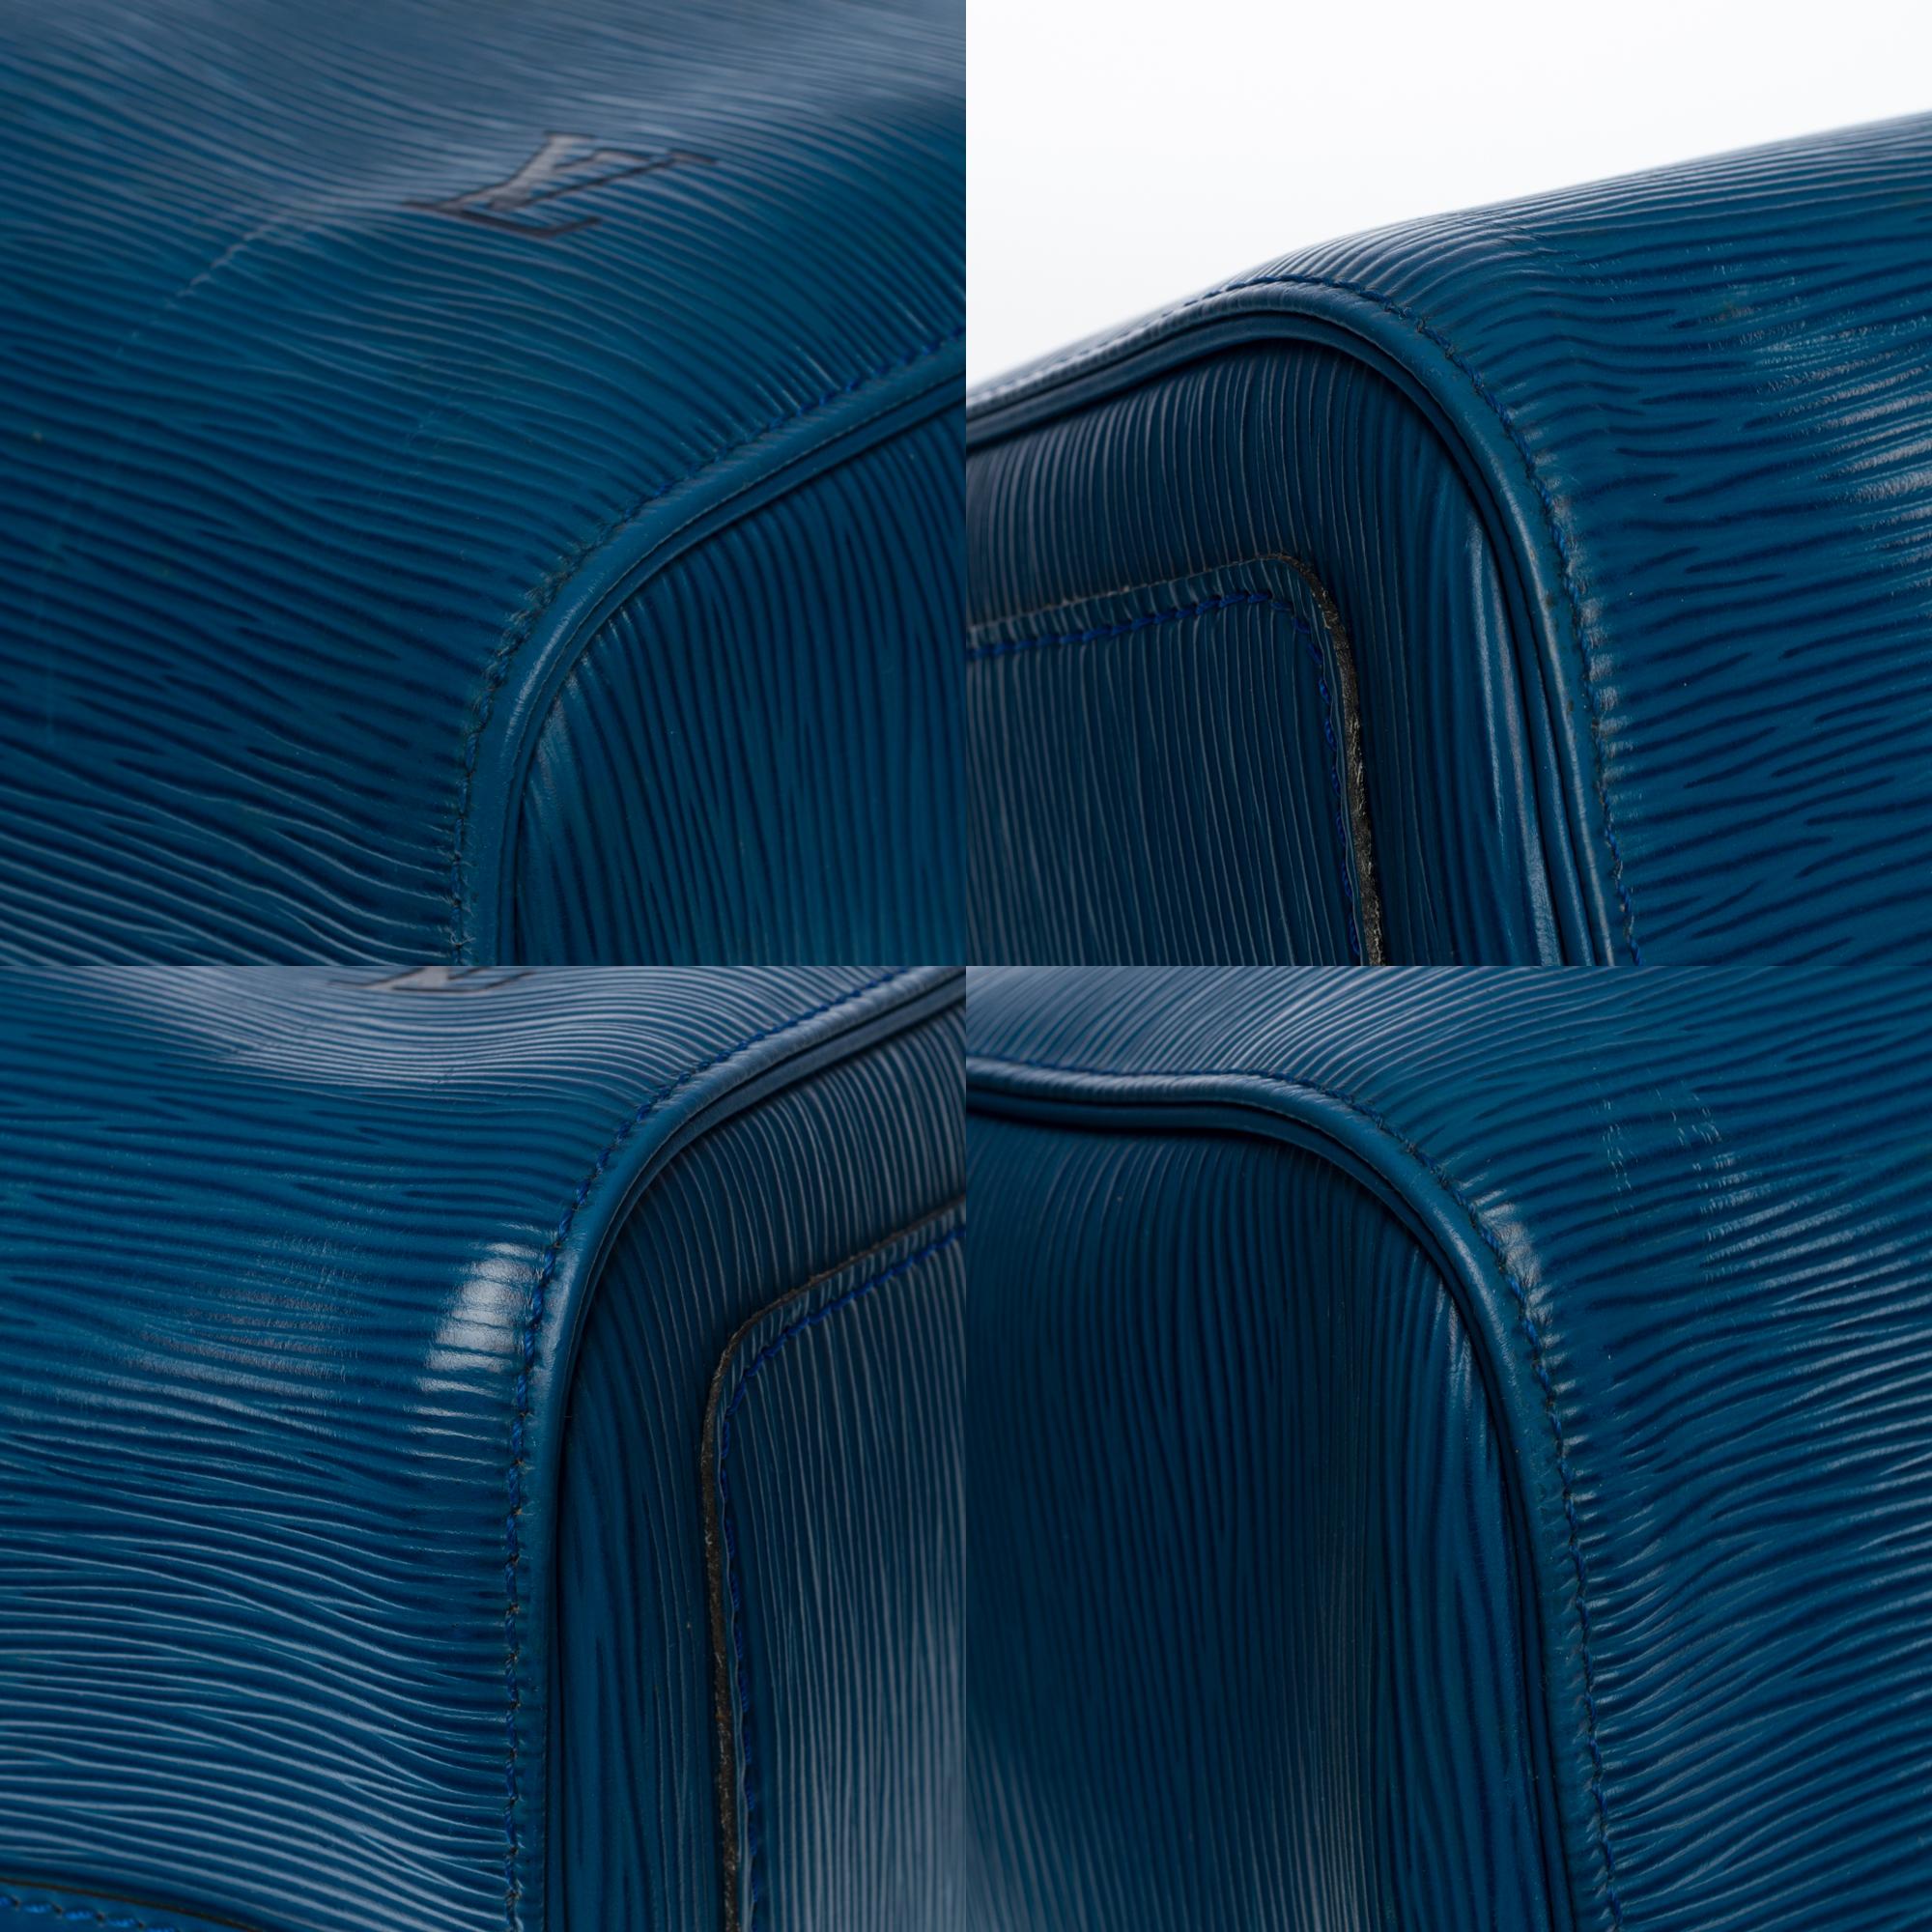 Louis Vuitton Speedy 30 handbag in blue cobalt épi leather and gold hardware 2